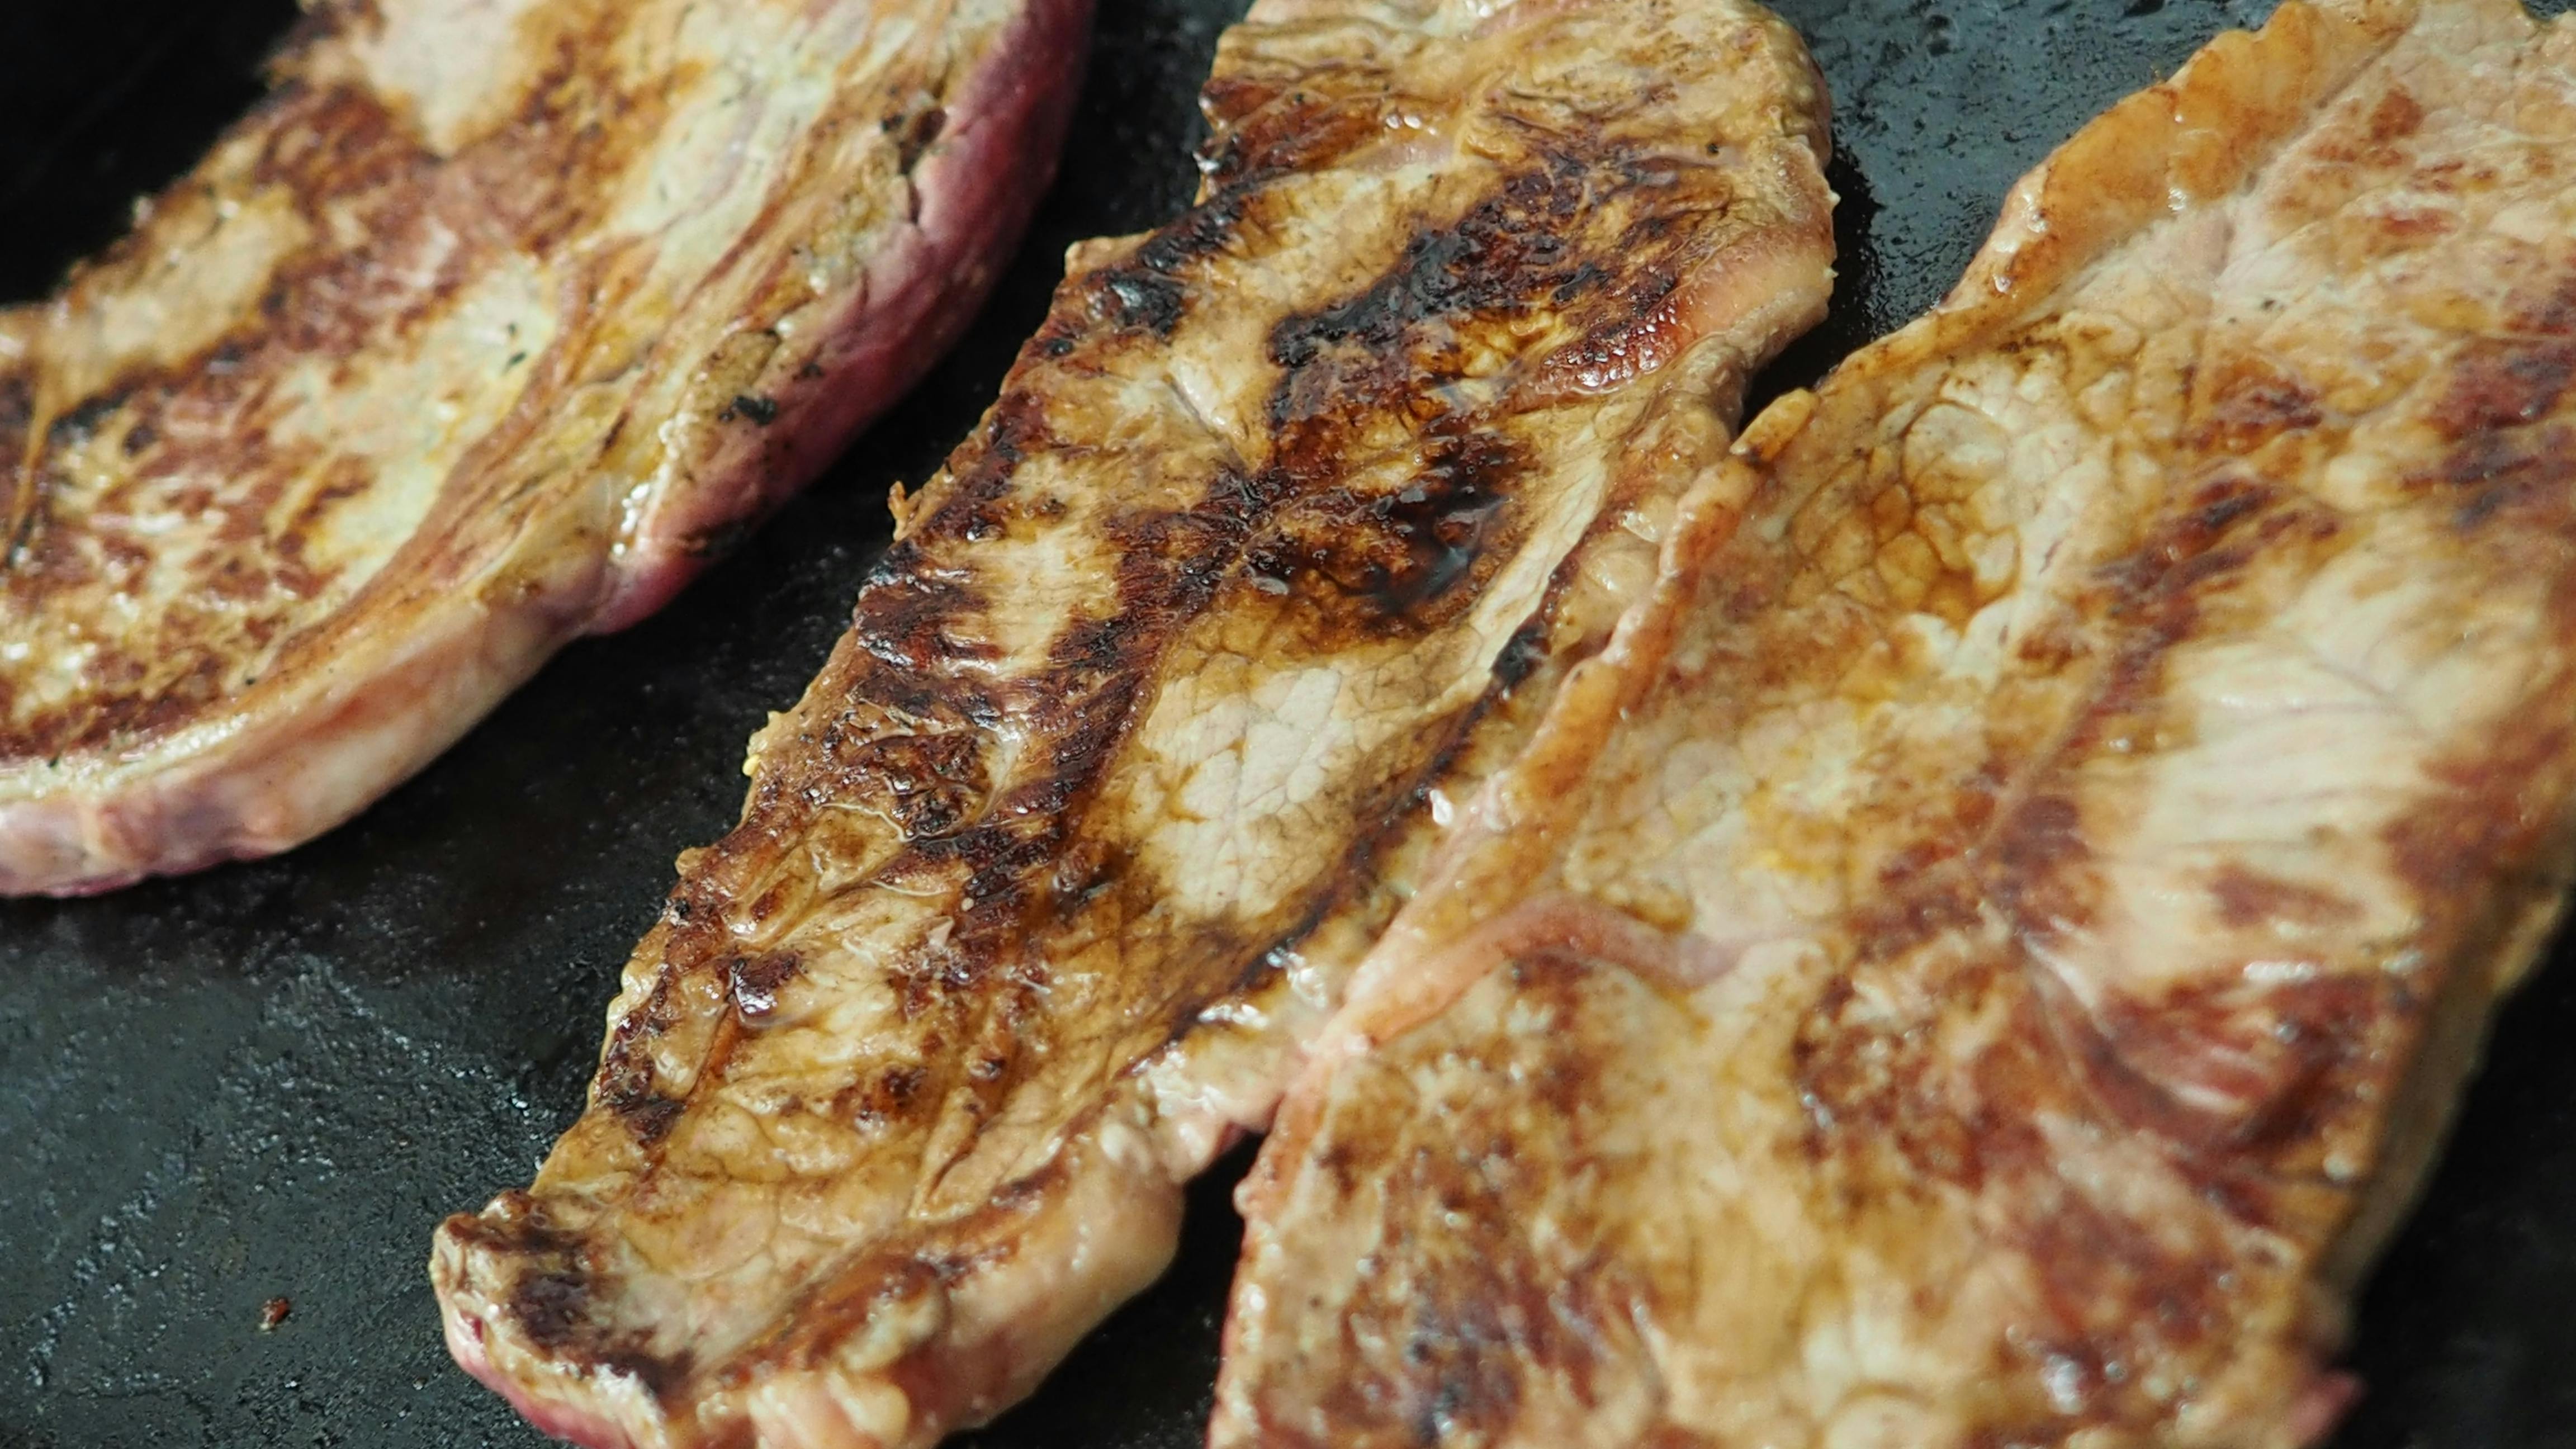 Free stock photo of cooking steak, steak, steak being cooked